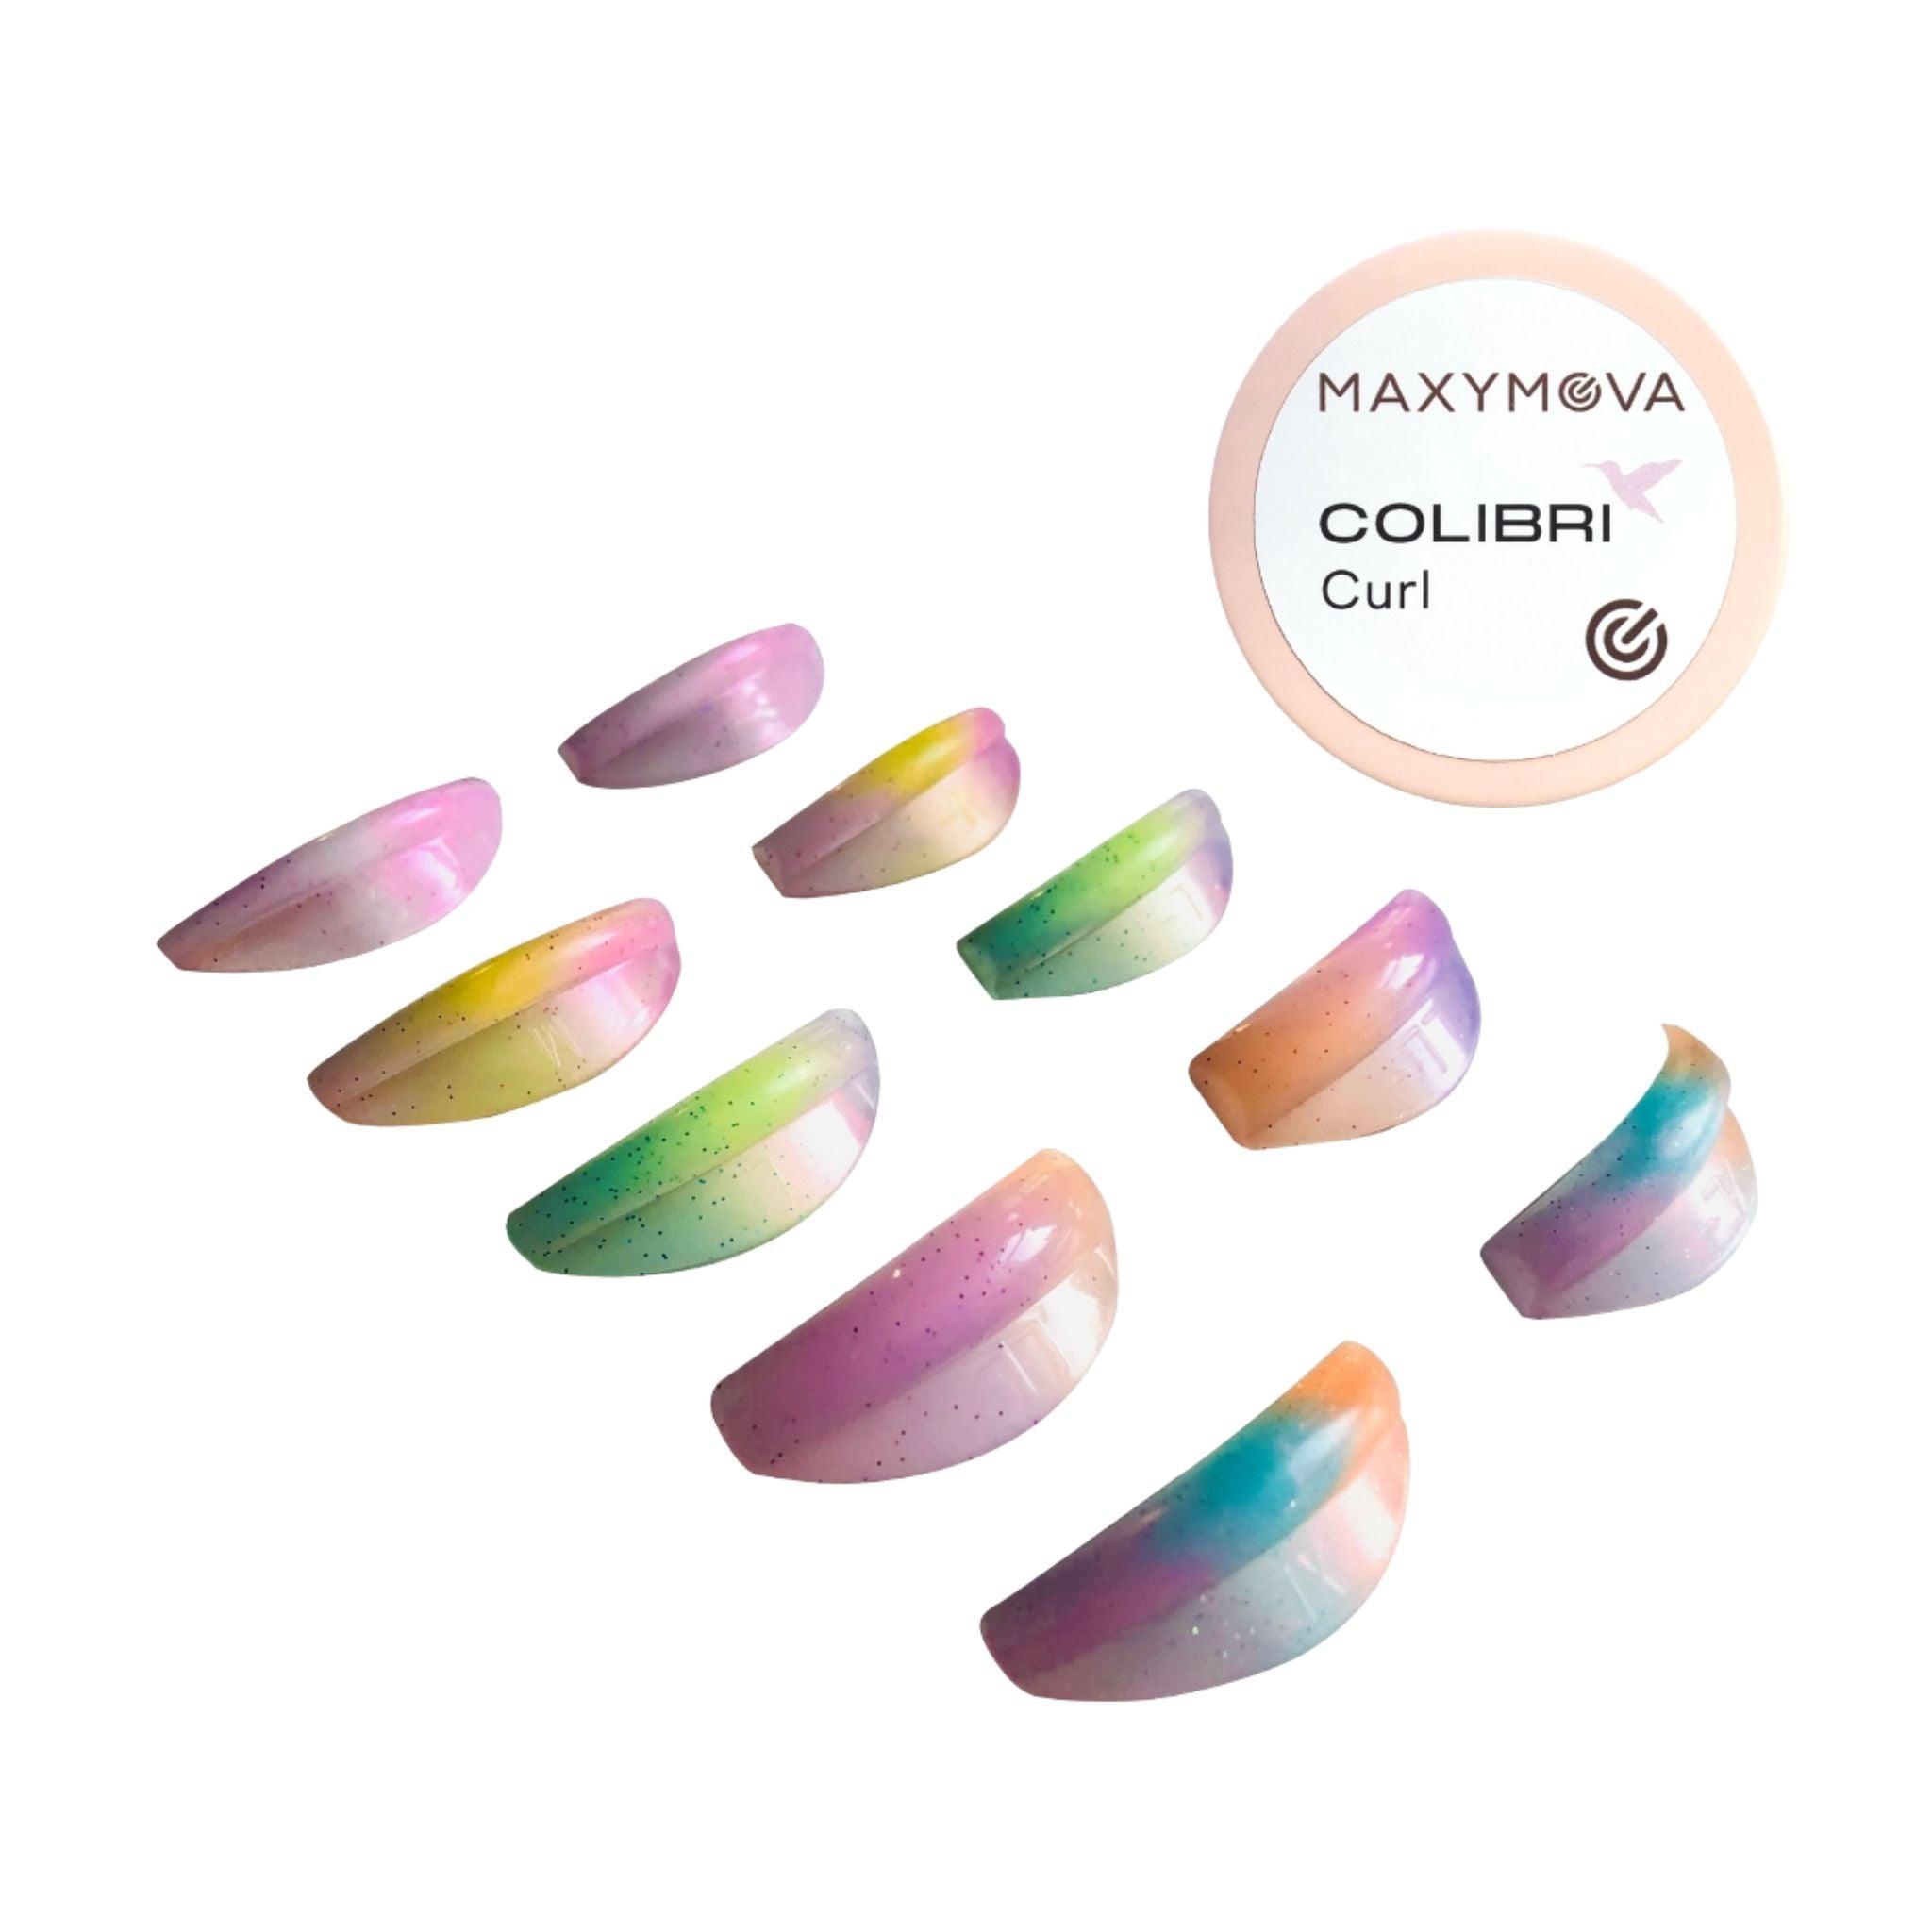 Maxymova Colibri Lash Lift Curlers - The Beauty House Shop